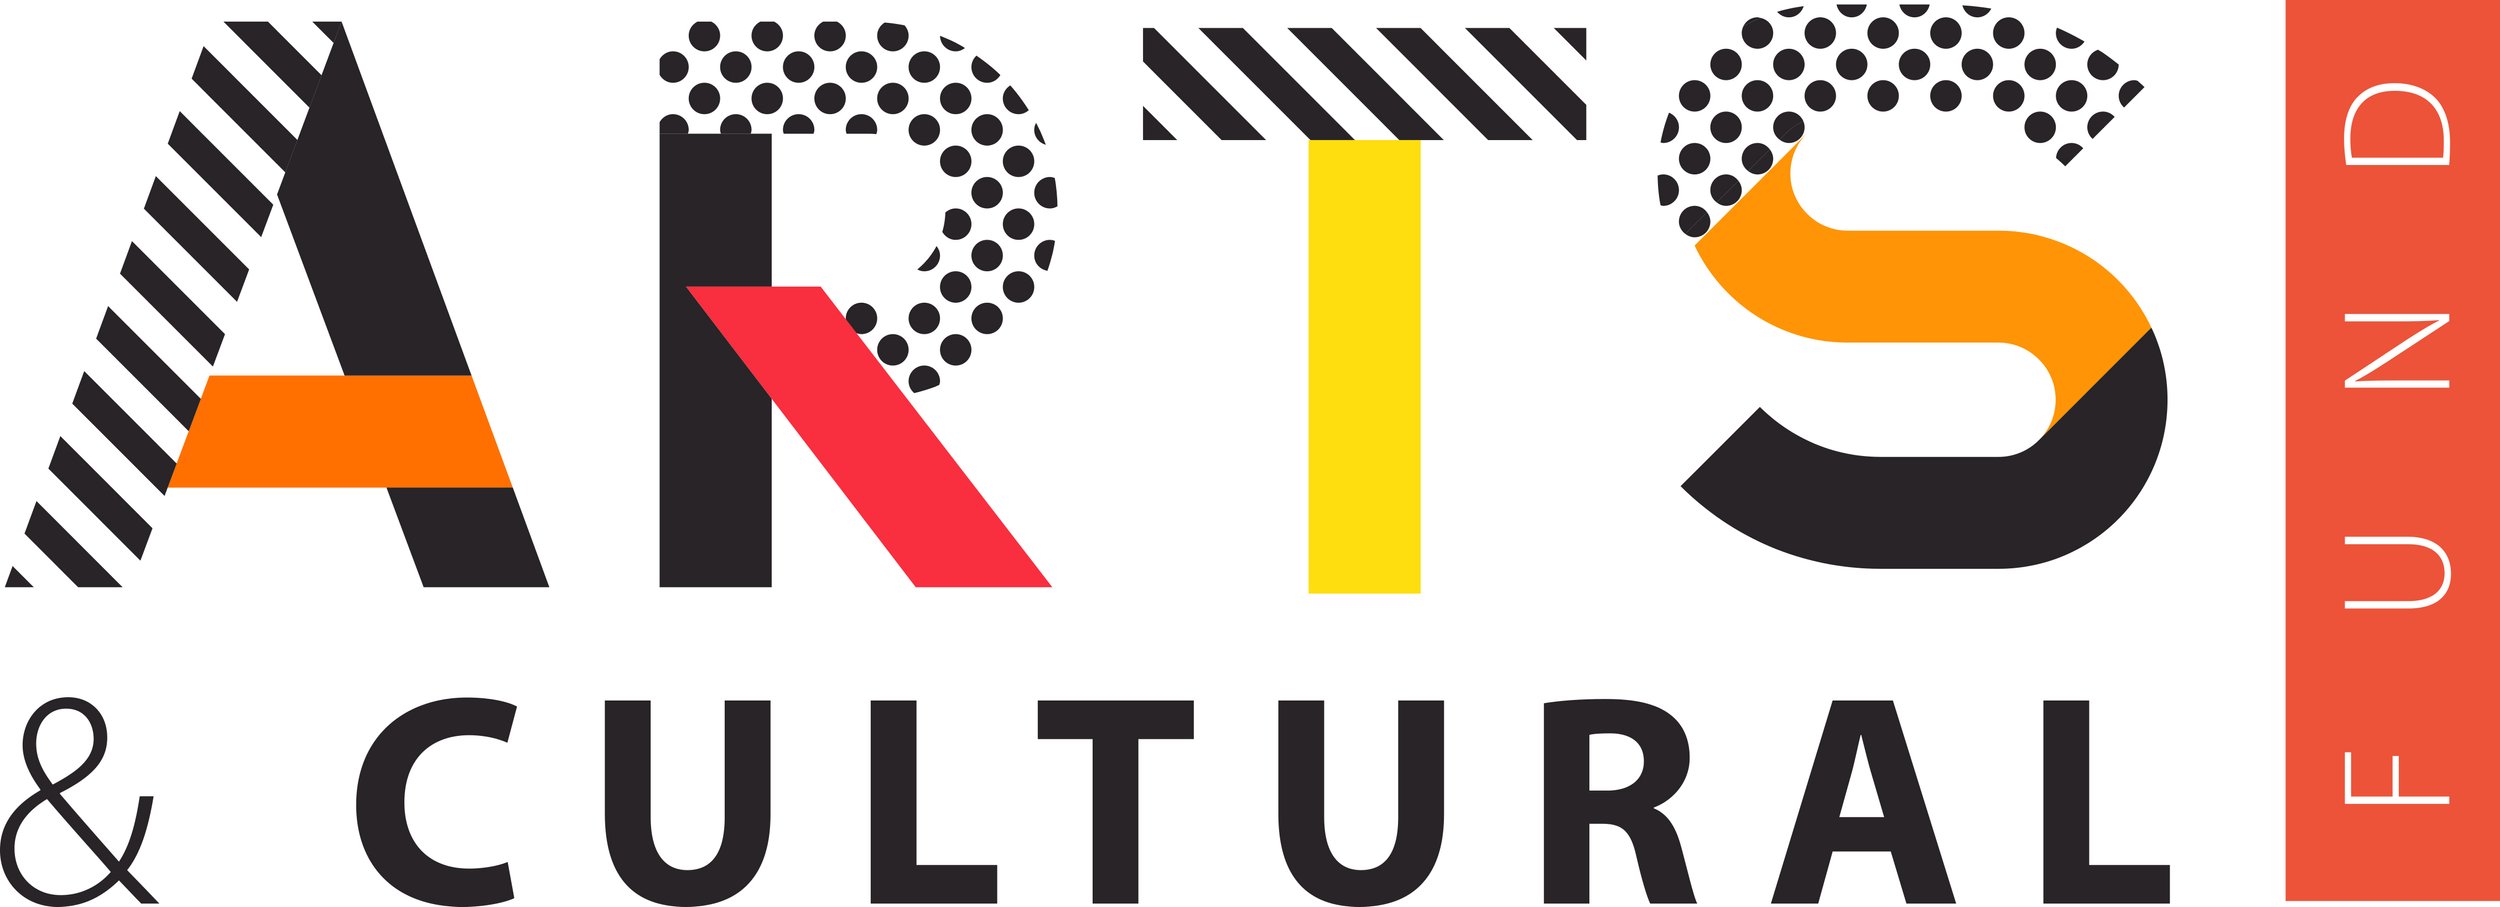 Arts & Culture logo-9.jpg